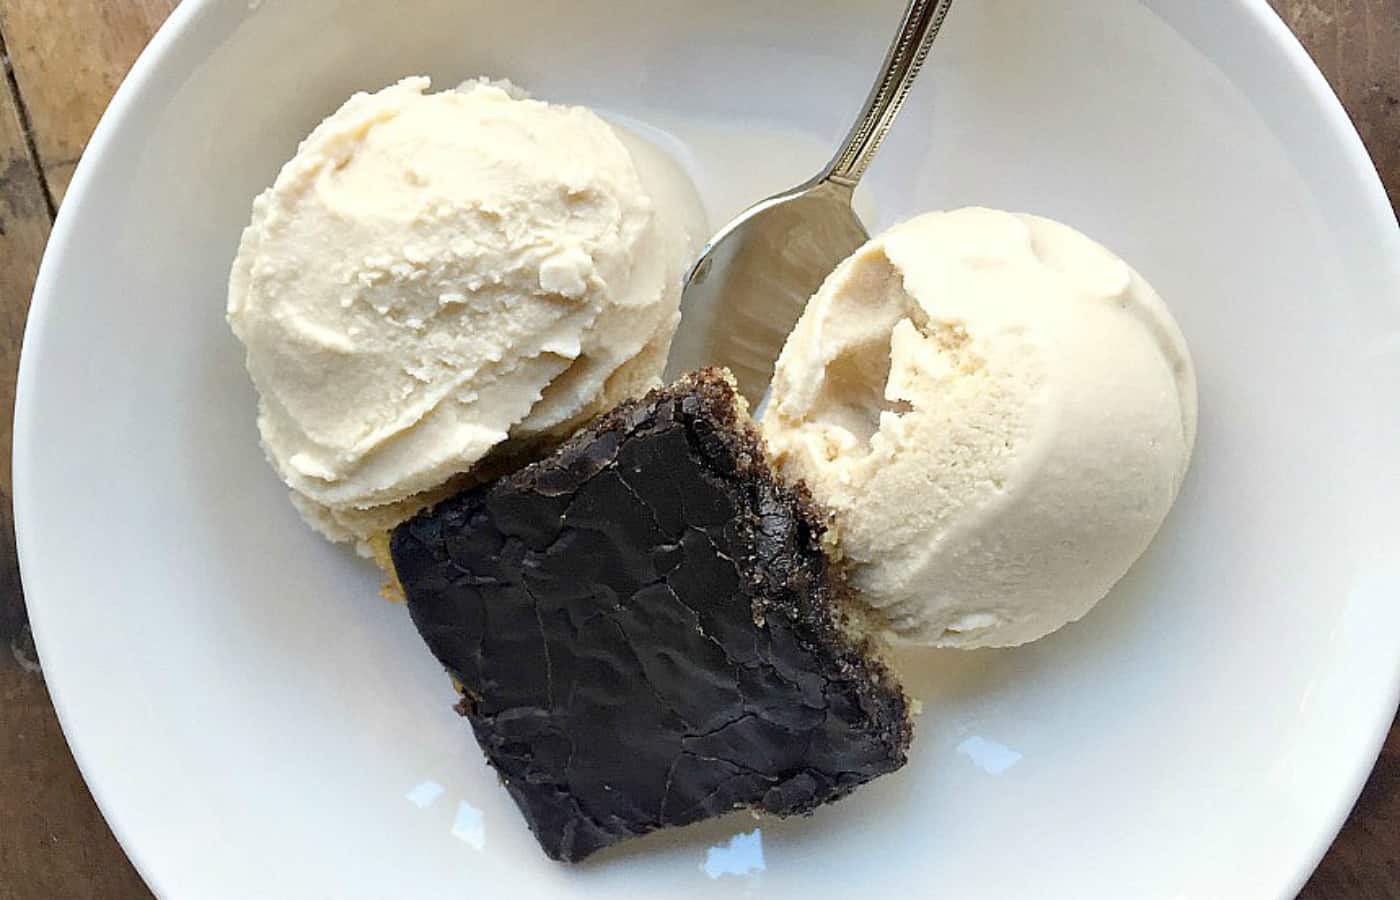 https://reluctantentertainer.com/wp-content/uploads/2016/08/Old-Fashioned-Homemade-Vanilla-Ice-Cream-7.jpg